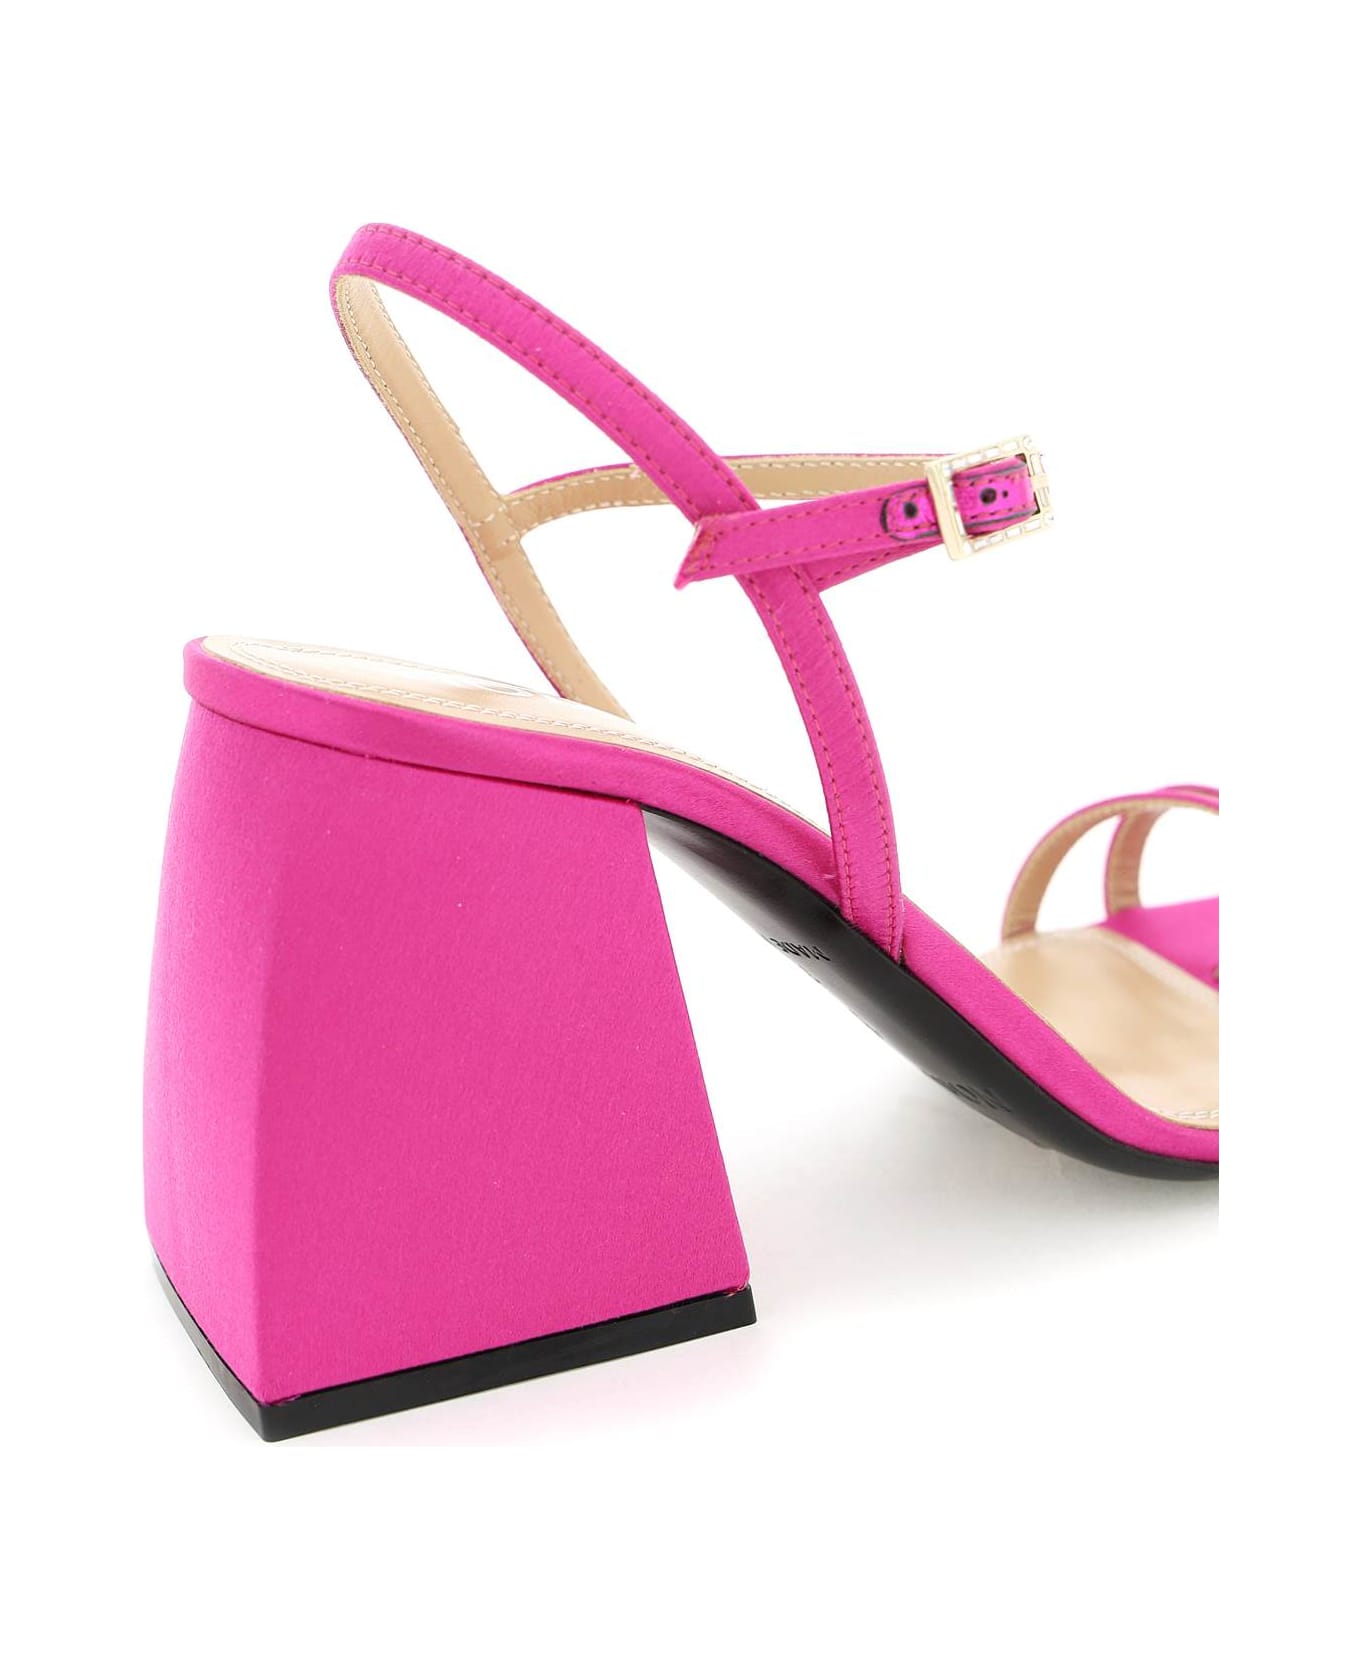 Nodaleto 'bulla Sally' Sandals - SHOCKING PINK (Pink)